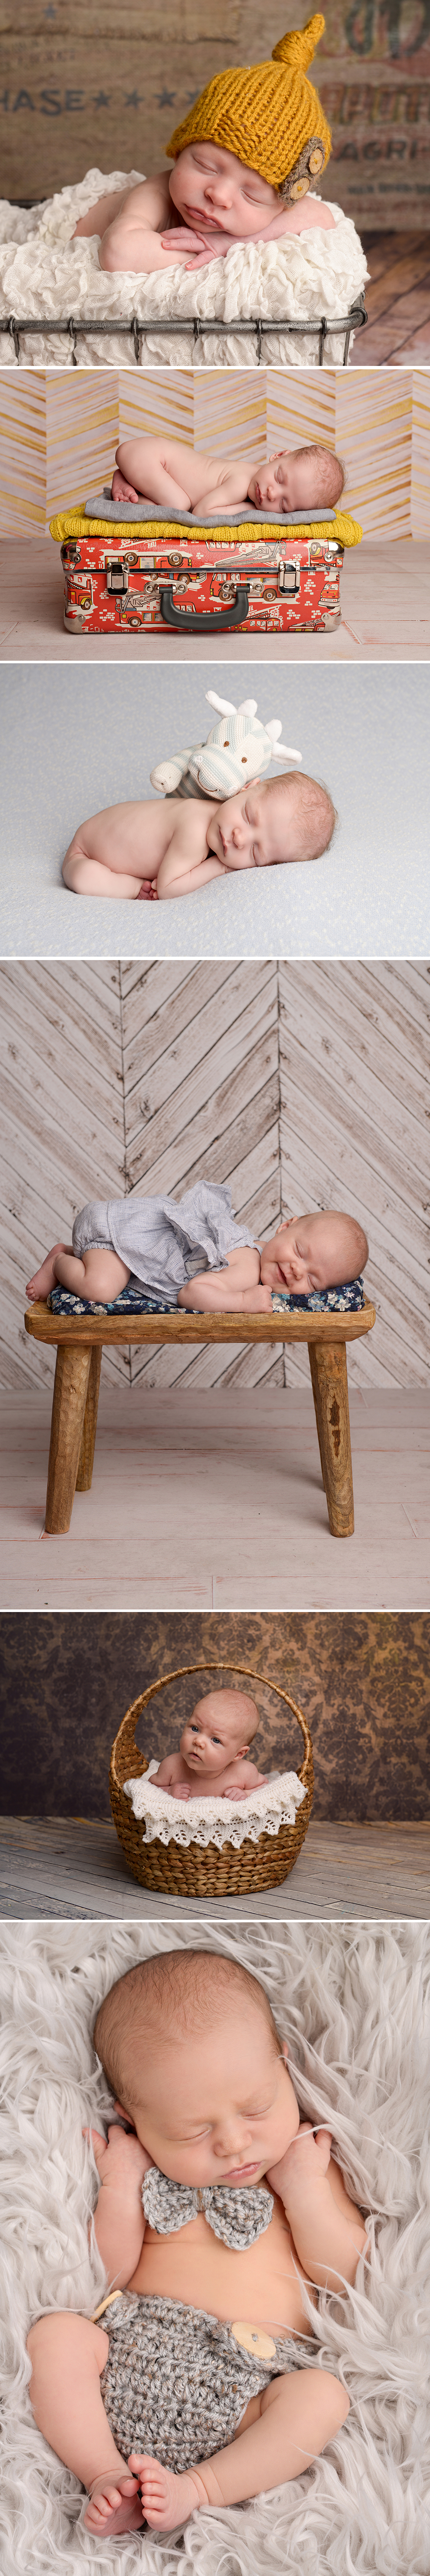 Newborn, Baby, & Family Portrait Studio Manchester - Bubbaloo Photography 8